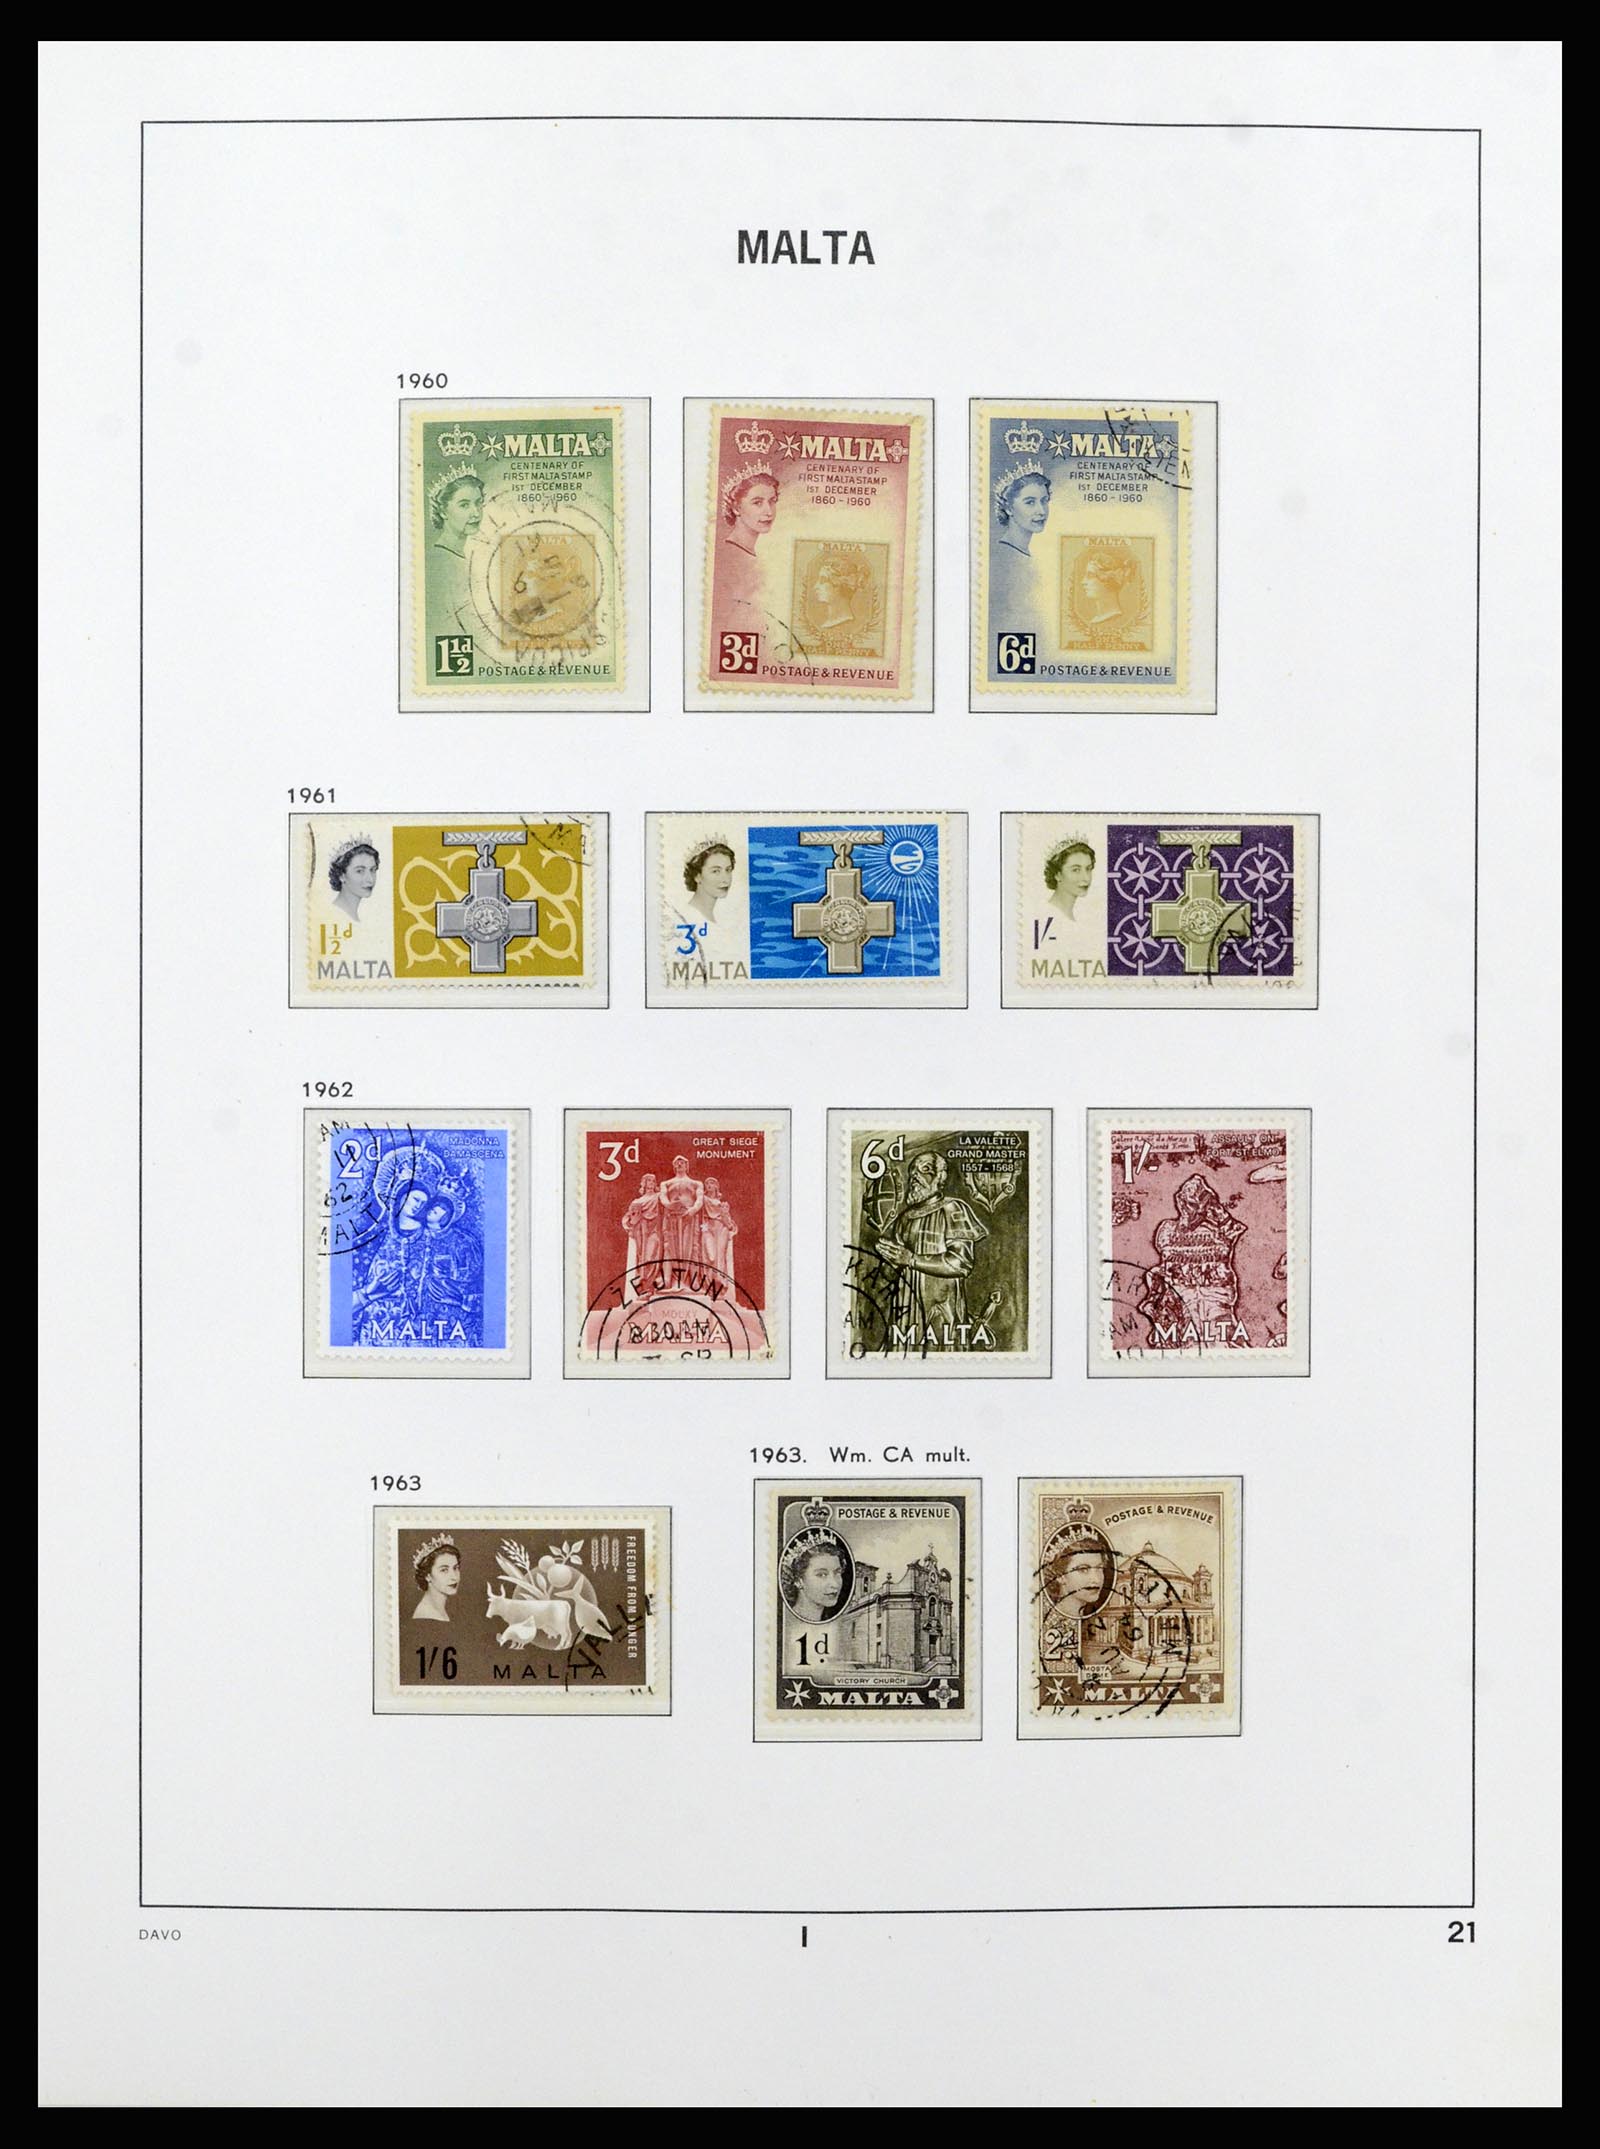 37212 021 - Stamp collection 37212 Malta 1863-1989.